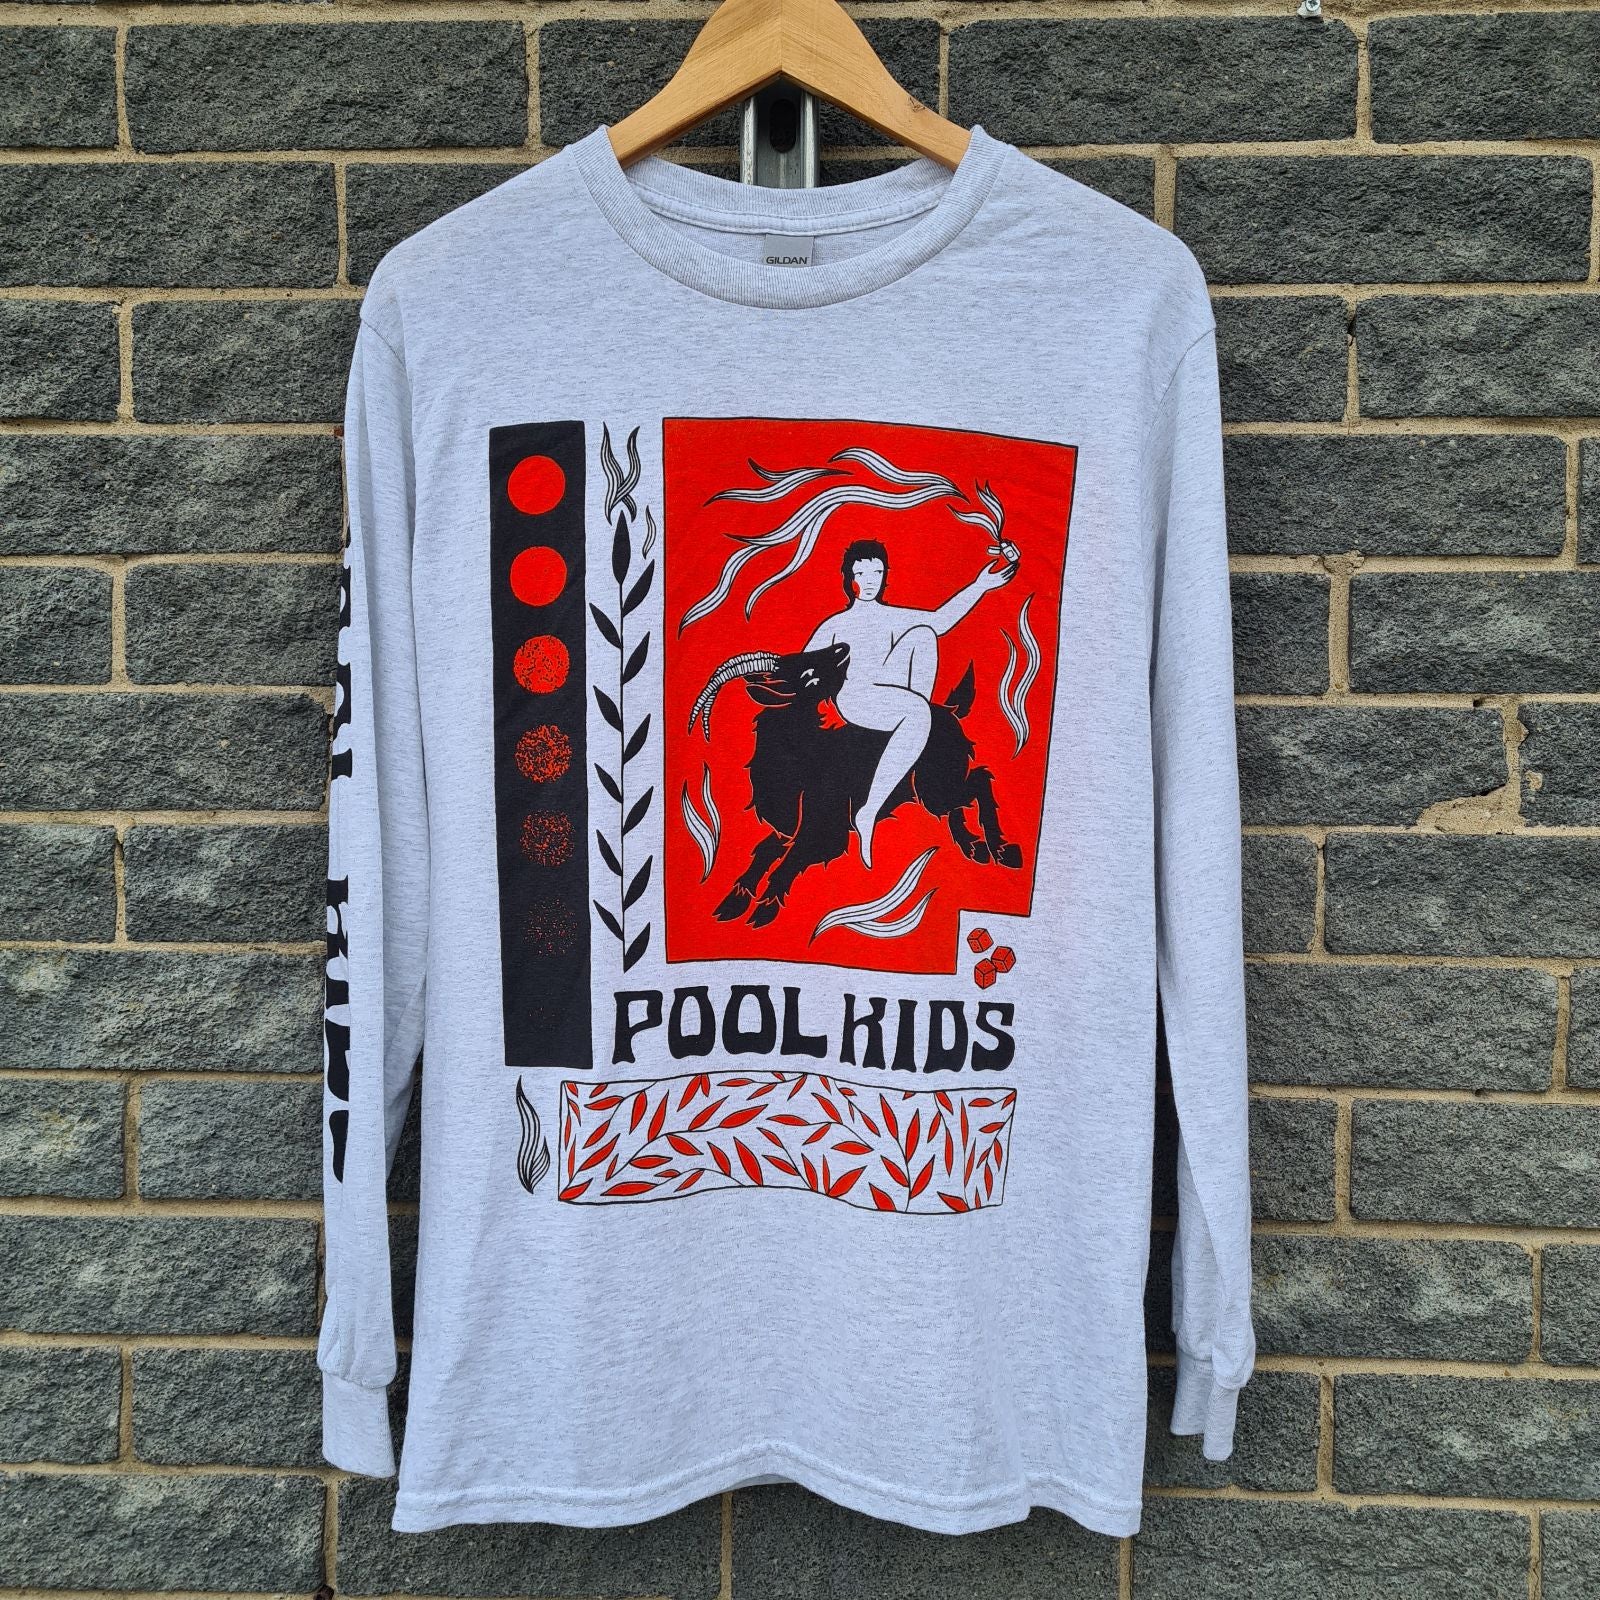 Pool Kids UK/EU Tour Long Sleeve